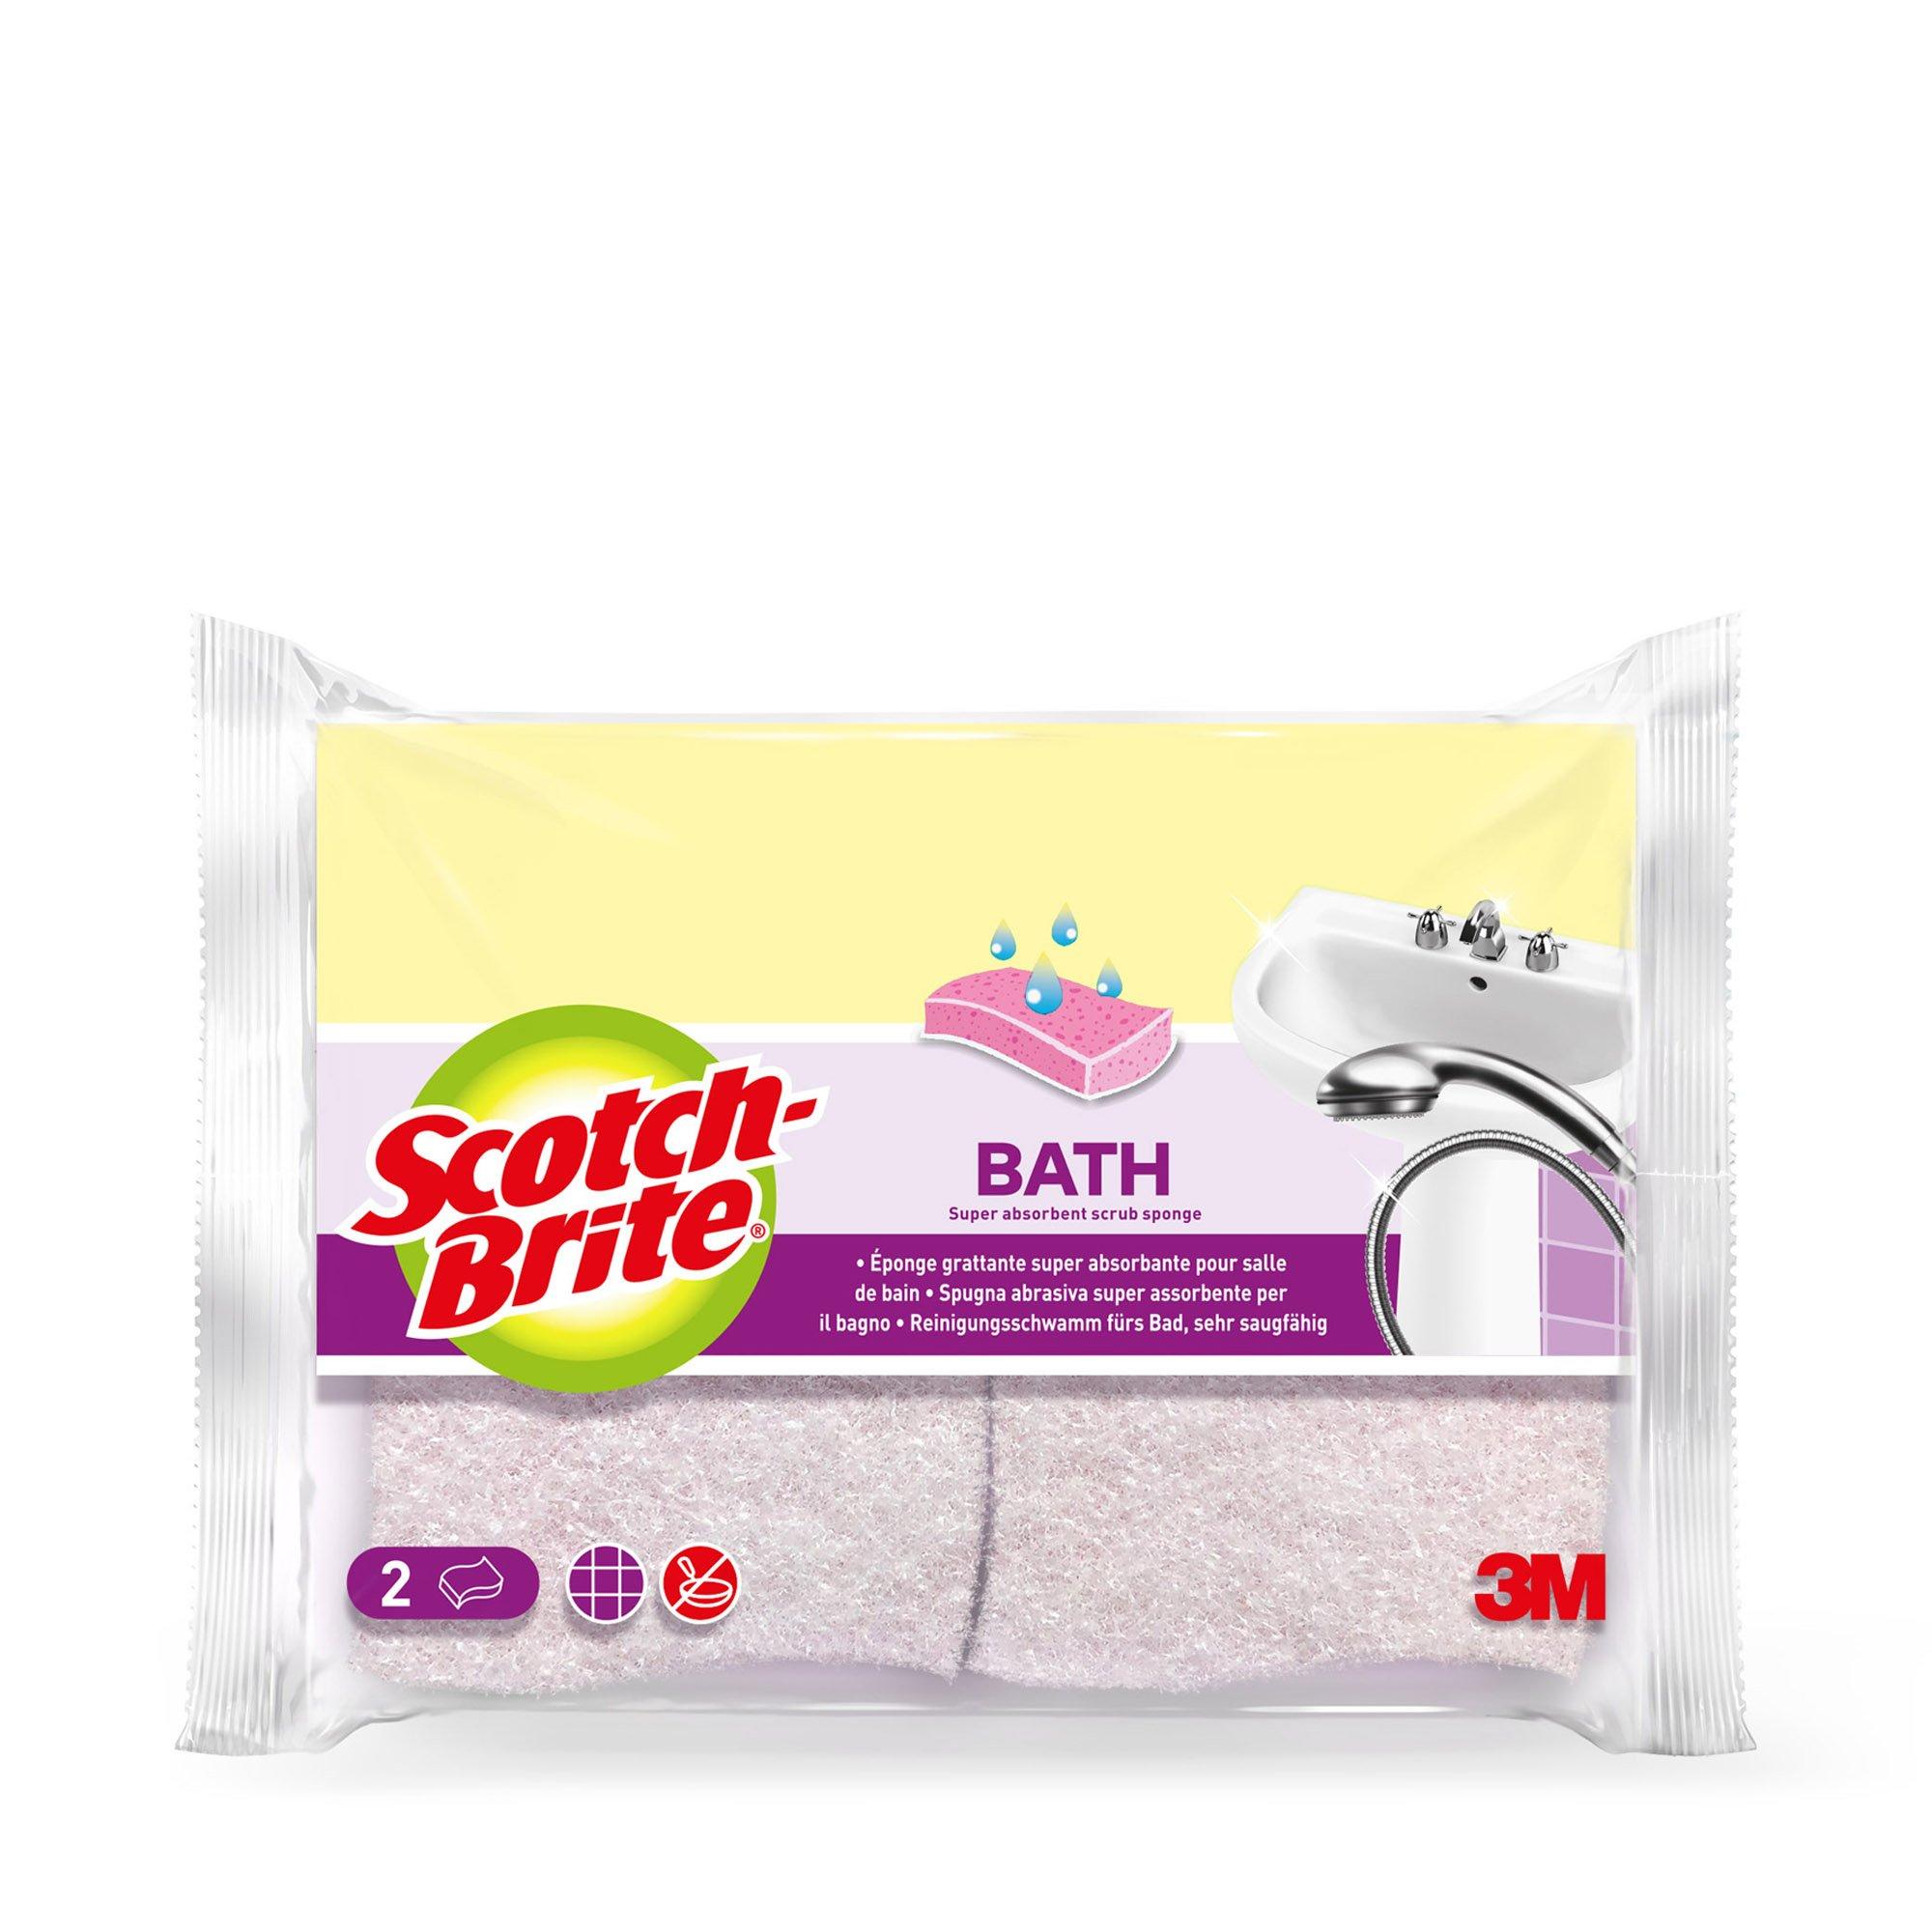 Scotch Brite Scotch-Brite® Bath Naturfaserschwamm soft, 2 Stk.
 BATH 